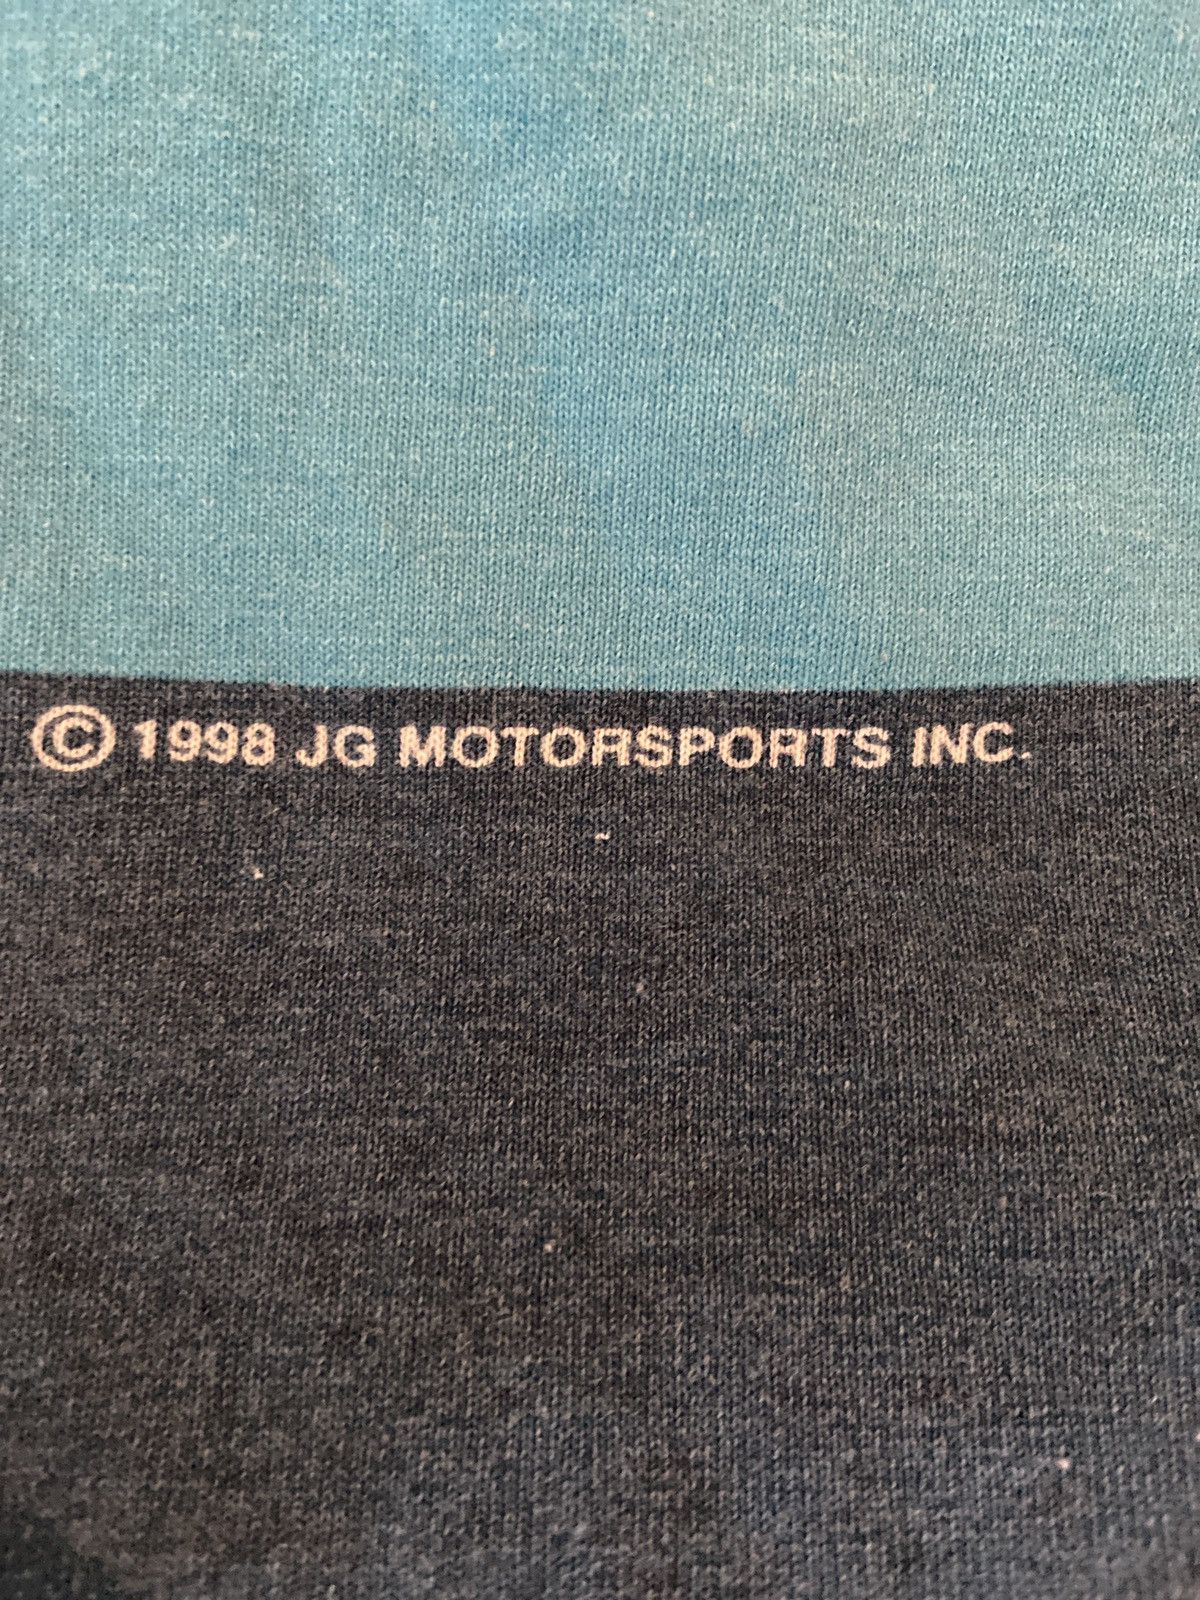 Chase Authentics Vintage 1998 Jeff Gordon 24 Dupont NASCAR Pit Crew Tshirt XL Size US XL / EU 56 / 4 - 6 Preview